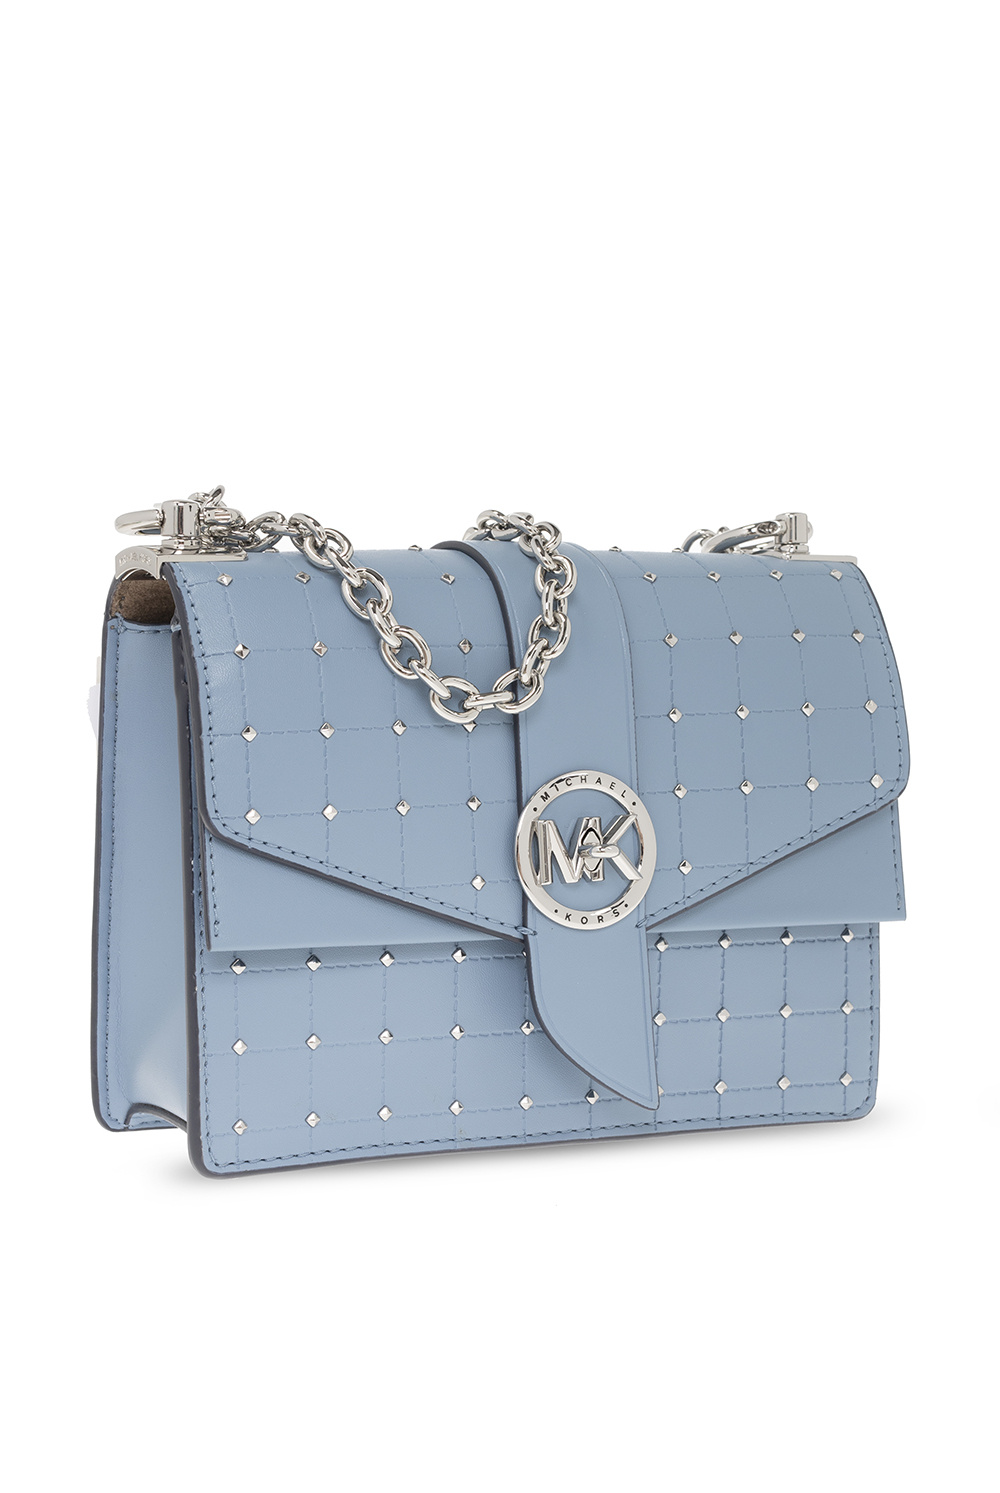 MICHAEL Michael Kors Handbag in Blue